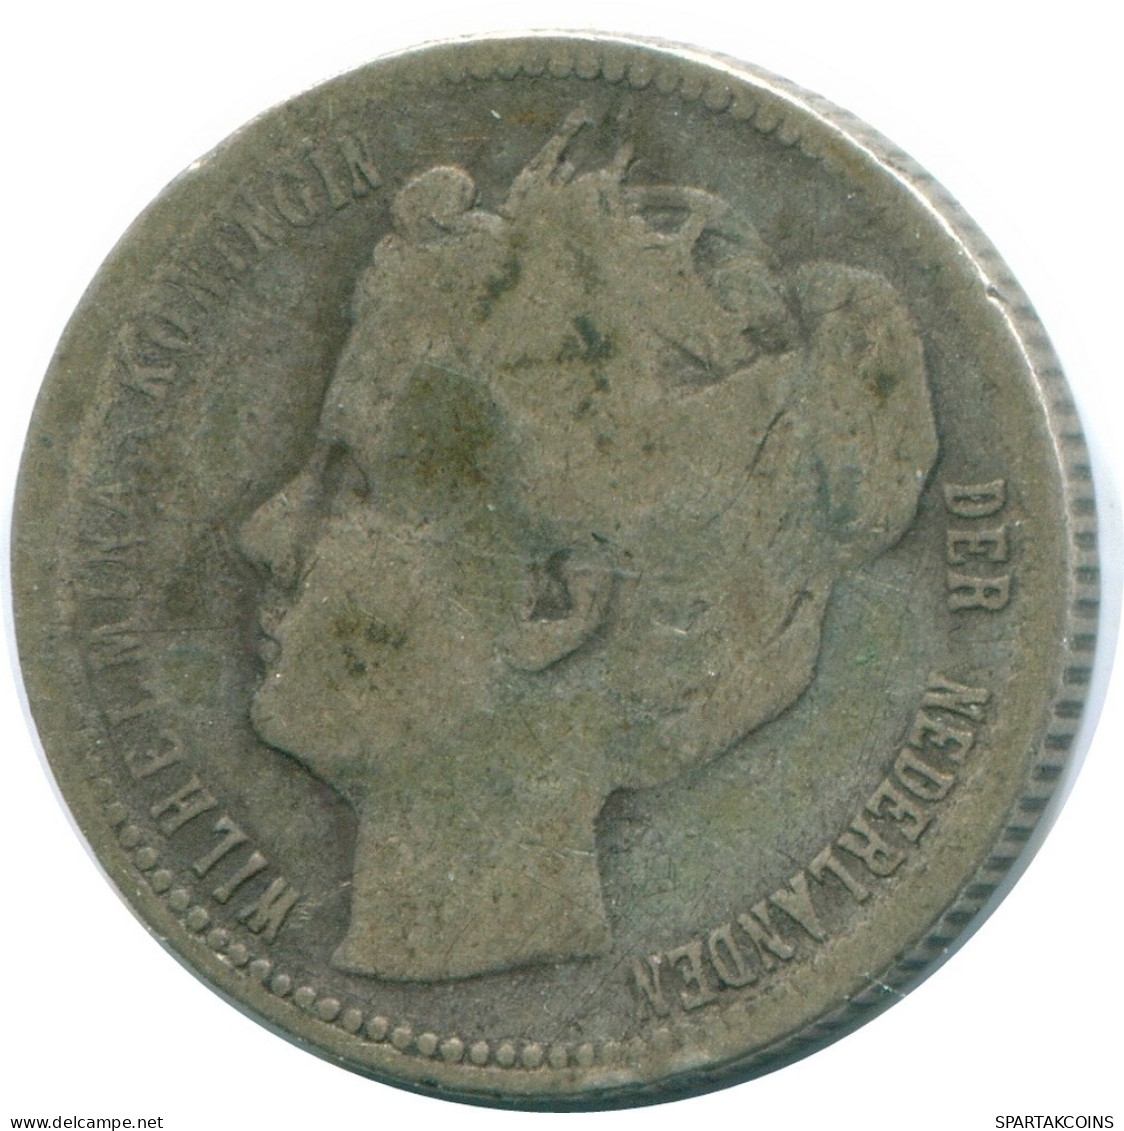 1/4 GULDEN 1900 CURACAO Netherlands SILVER Colonial Coin #NL10505.4.U.A - Curacao